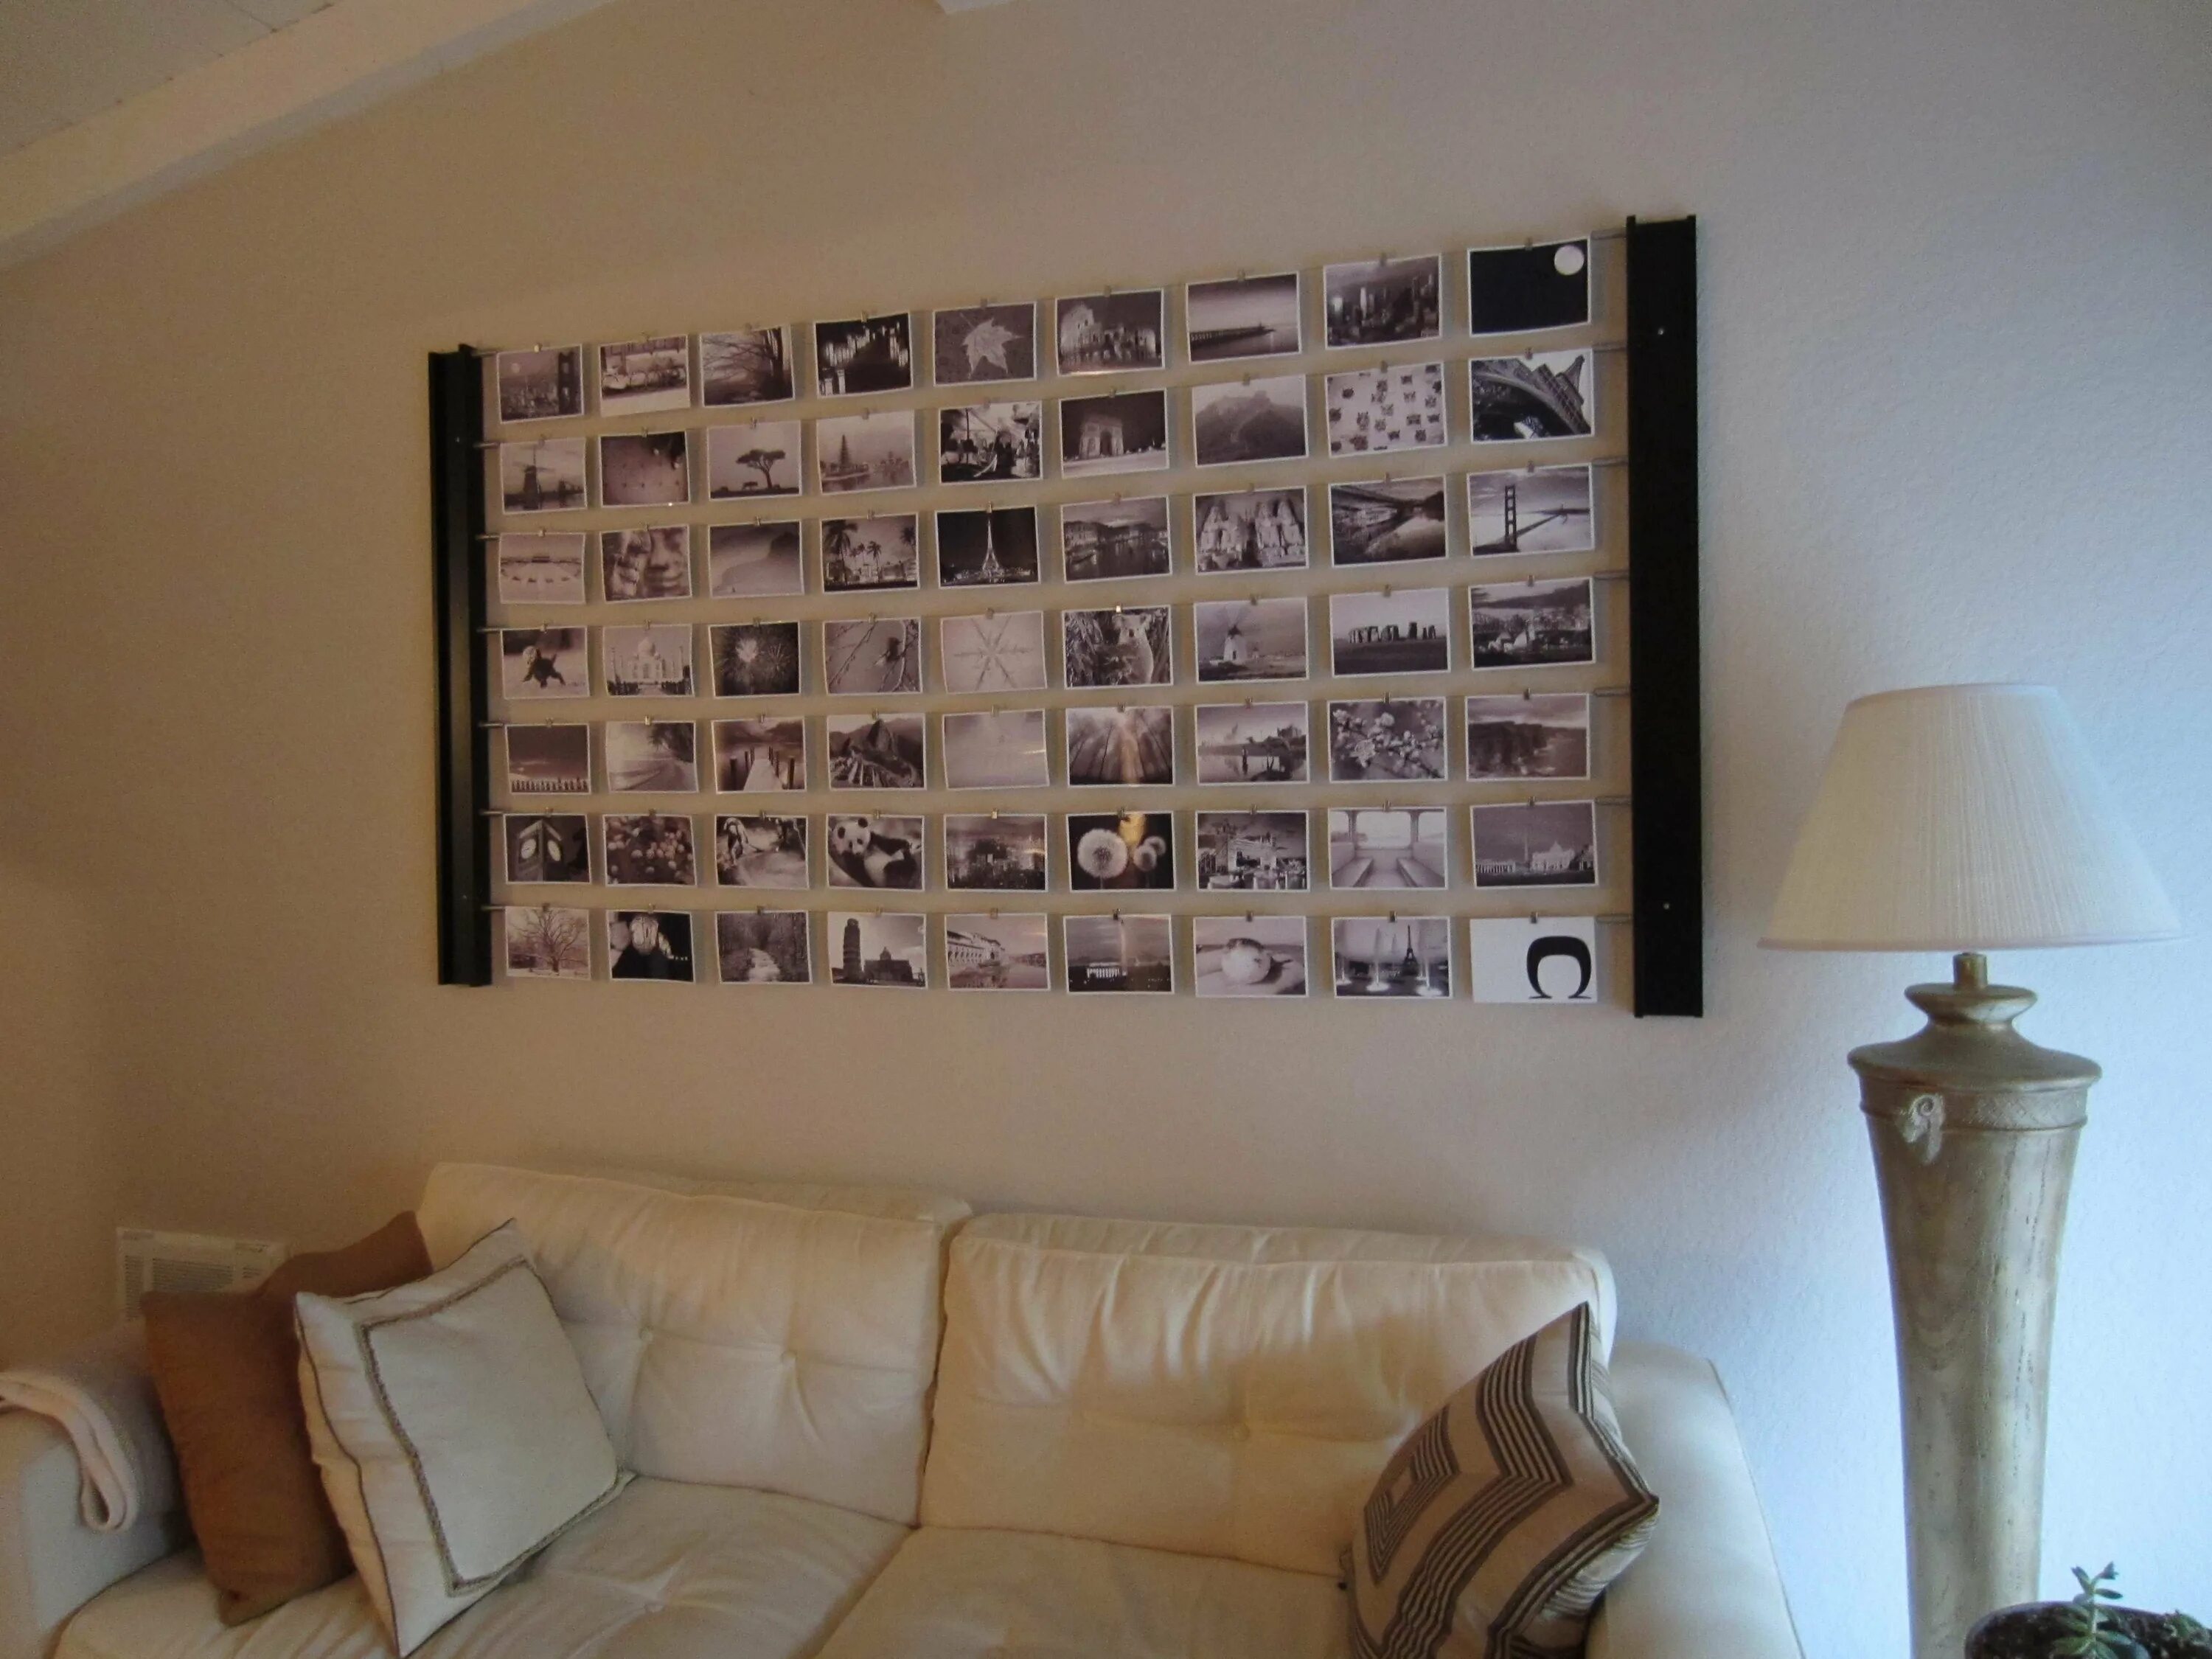 Квартиру повесить. Интересный декор стен. Идеи с фотографиями на стену. Декор стены фотографиями. Идеи для стены в комнате.